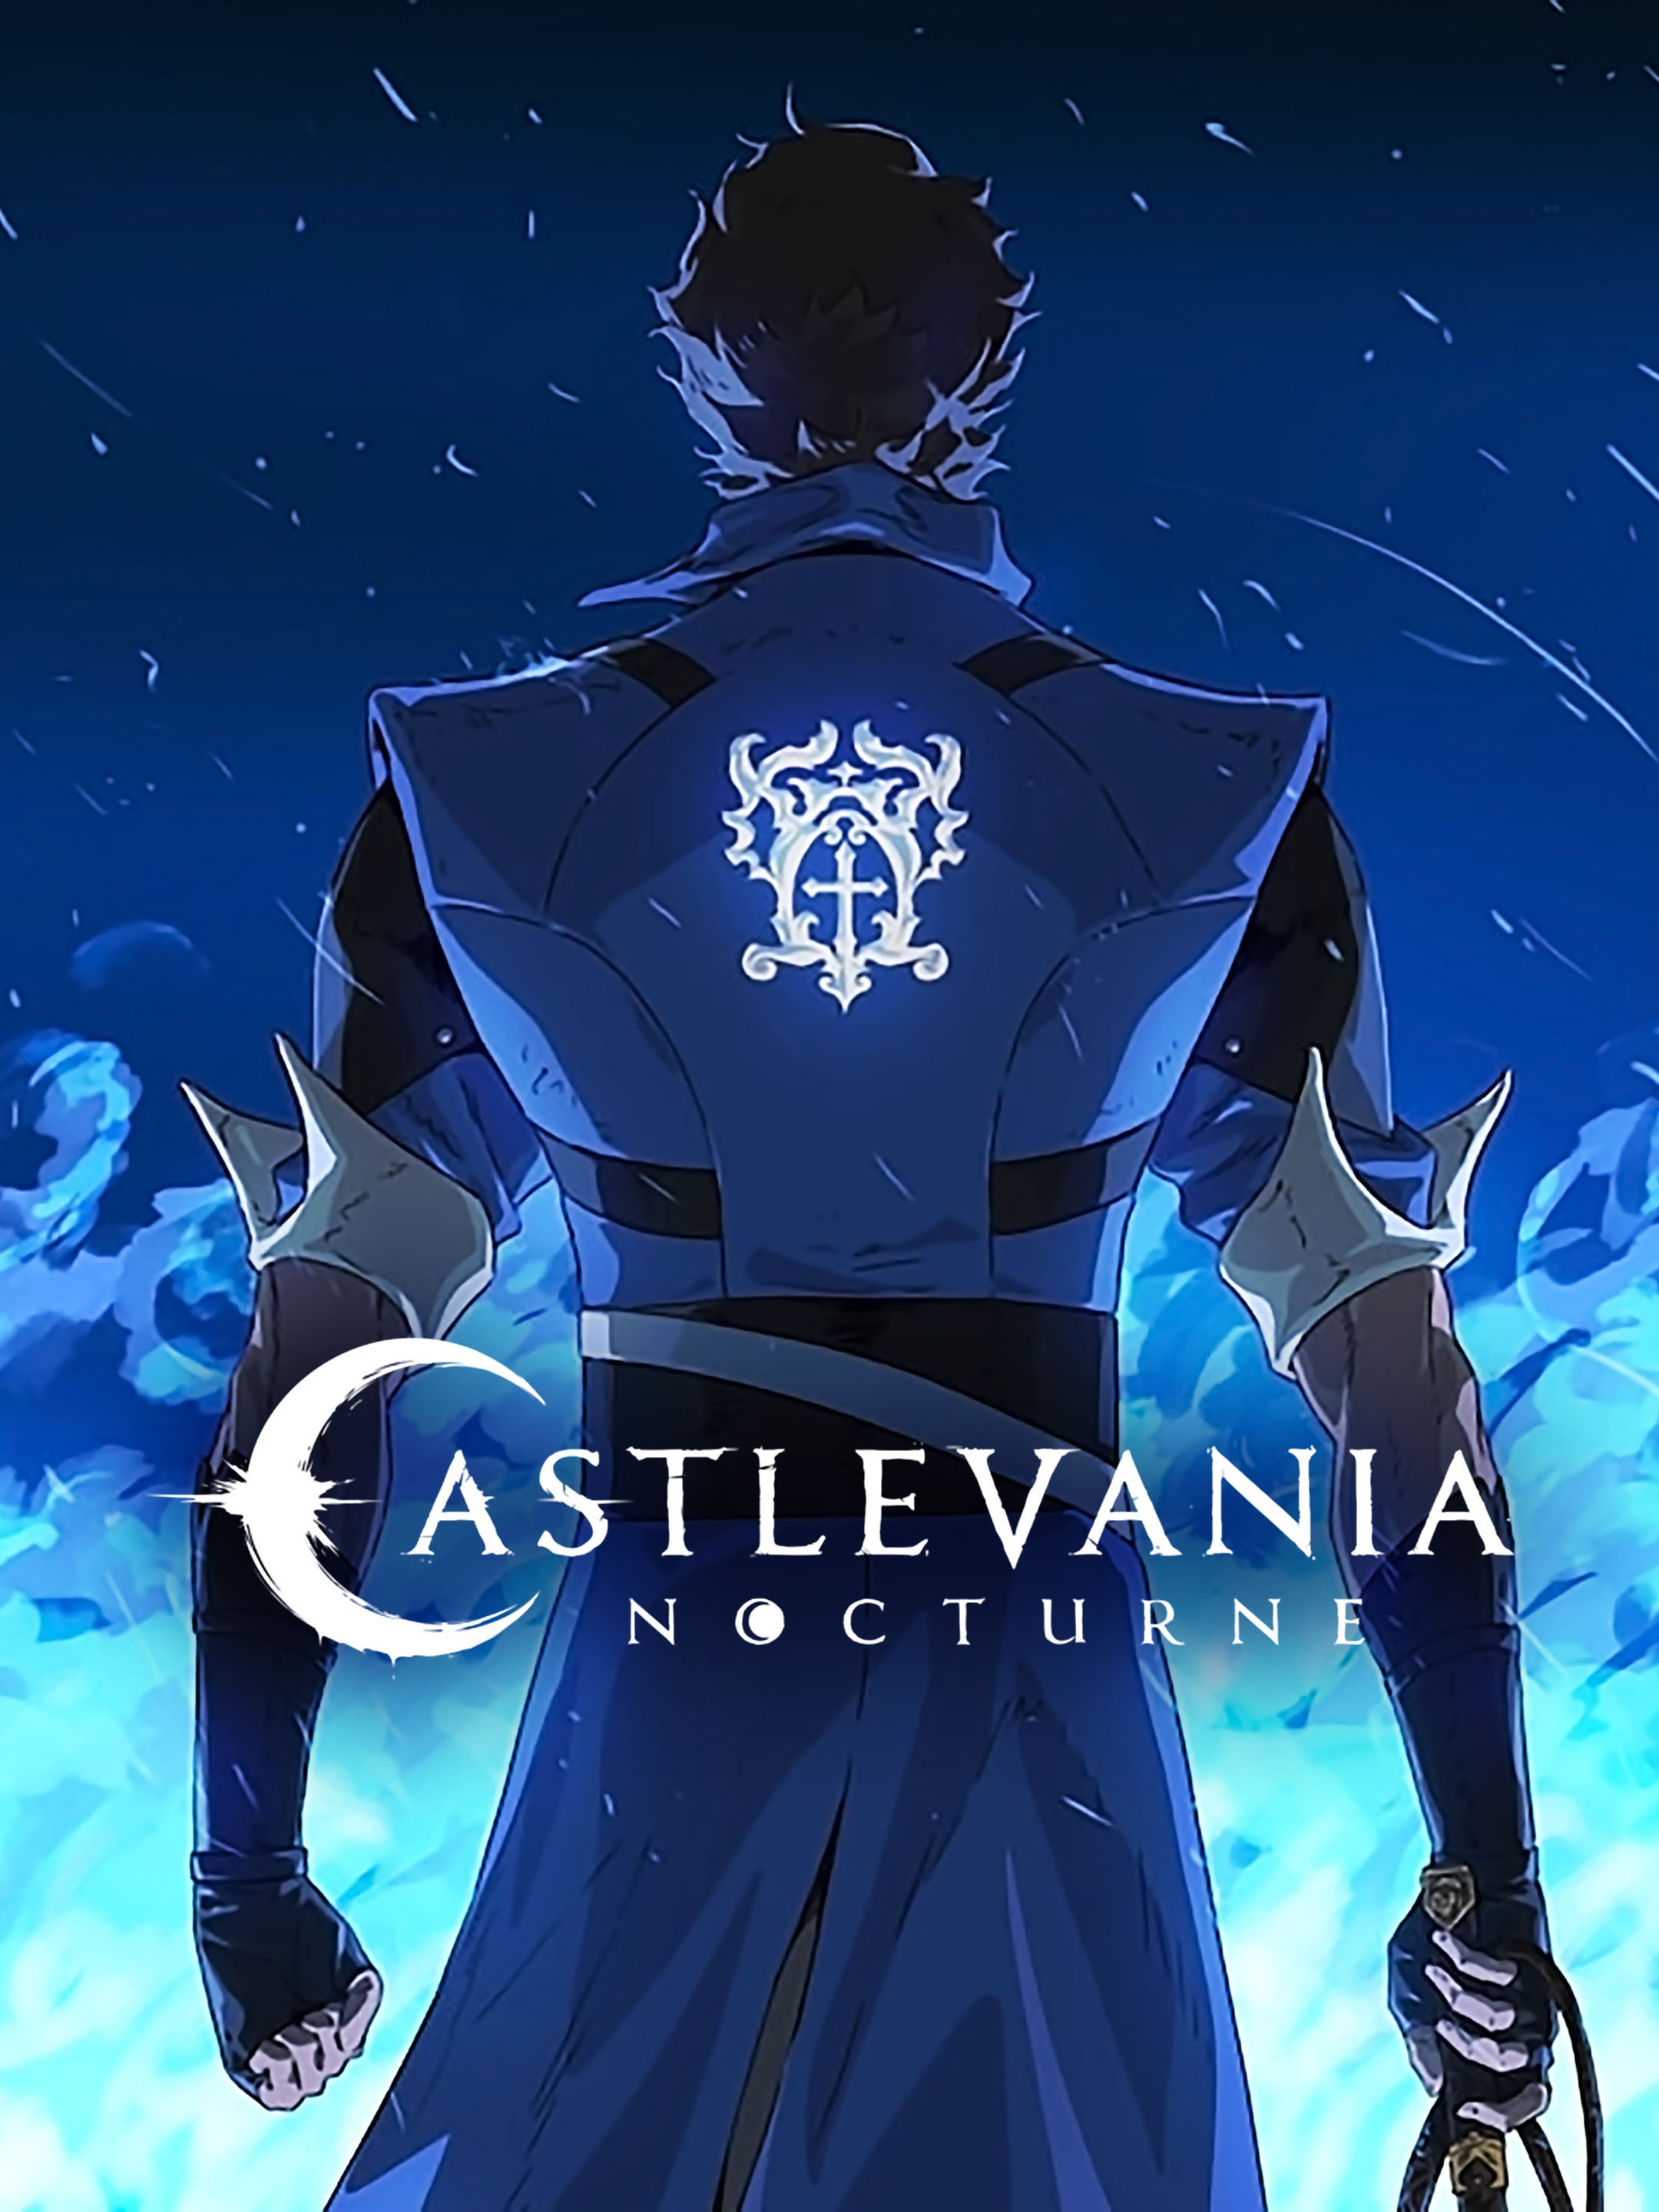 Media Review: Castlevania: Nocturne (Season 1)